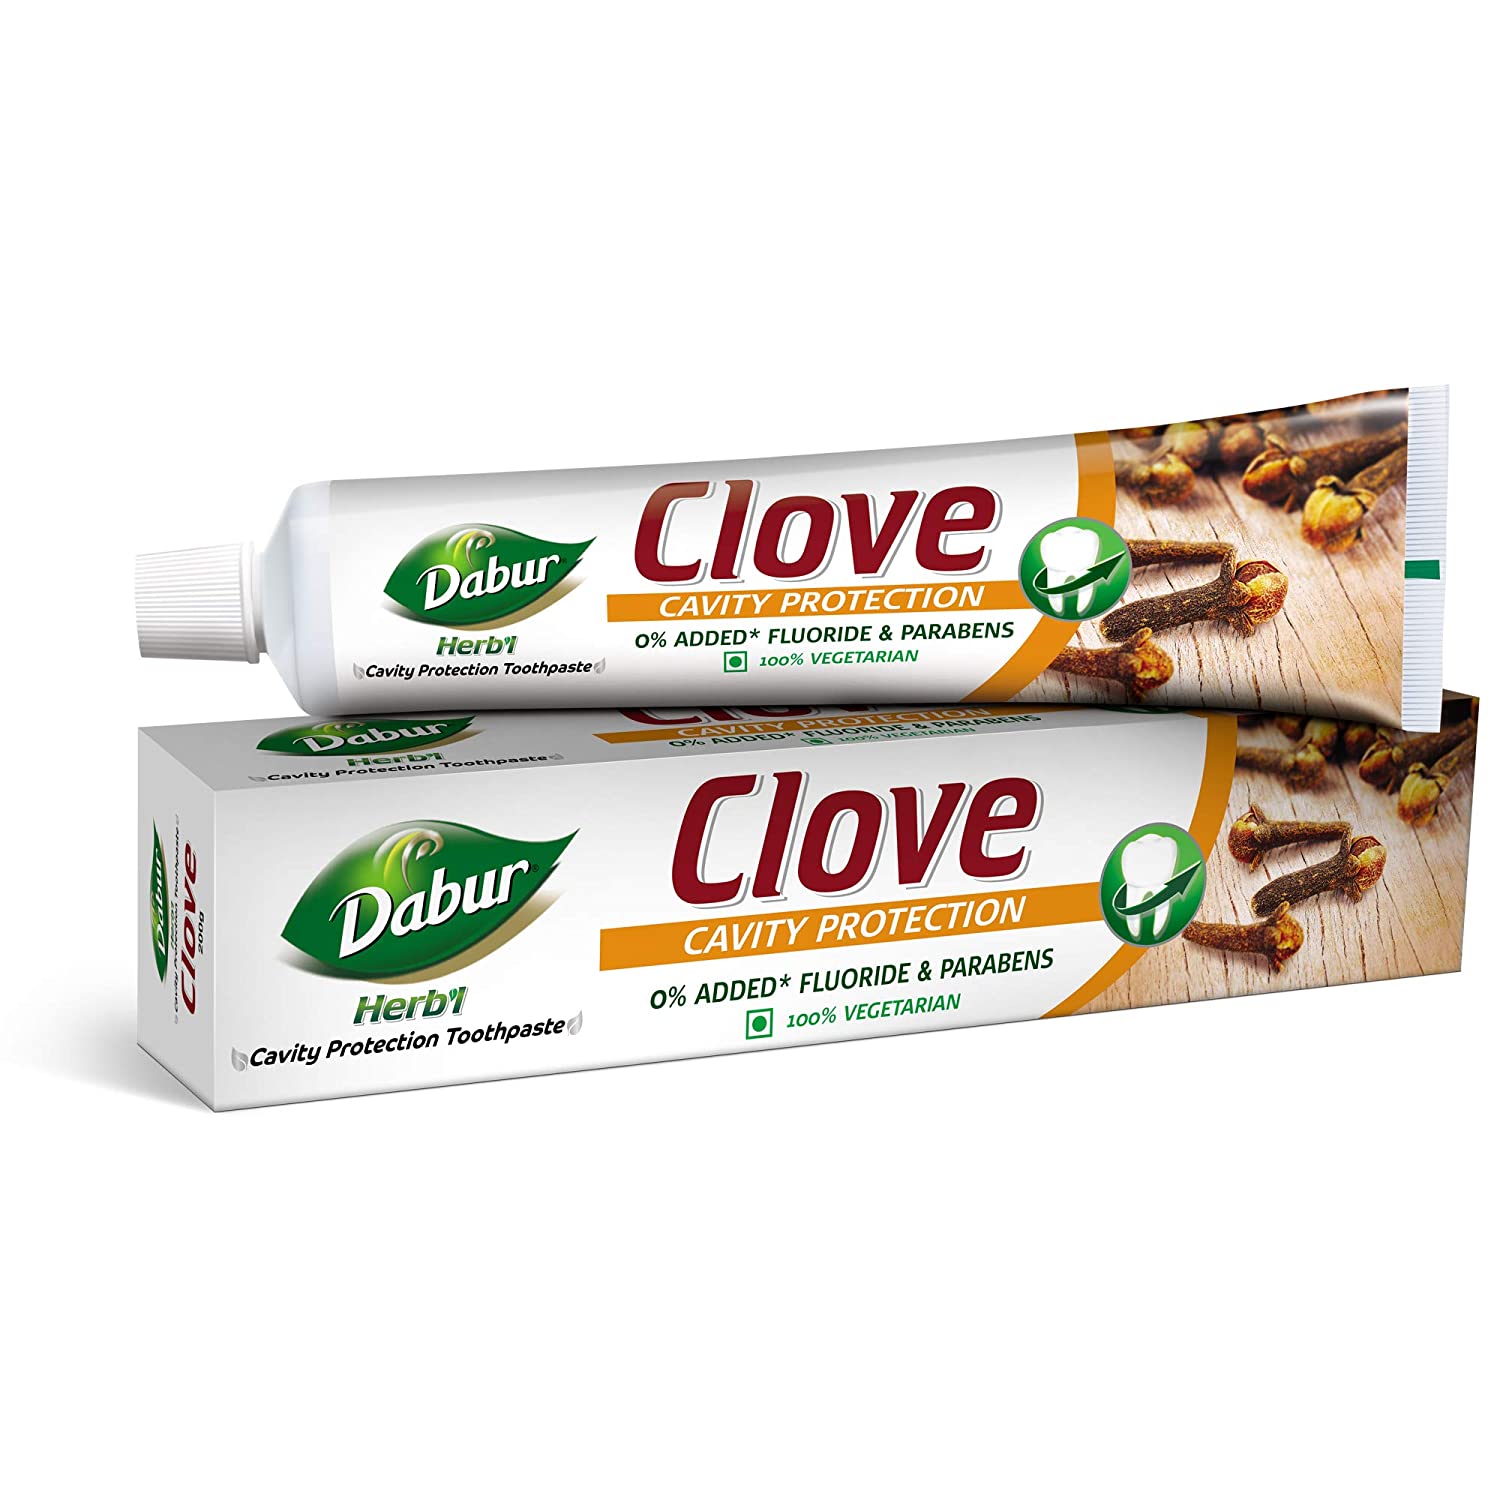 Dabur Herb'l Clove - Cavity Protection Toothpaste - 200 GM